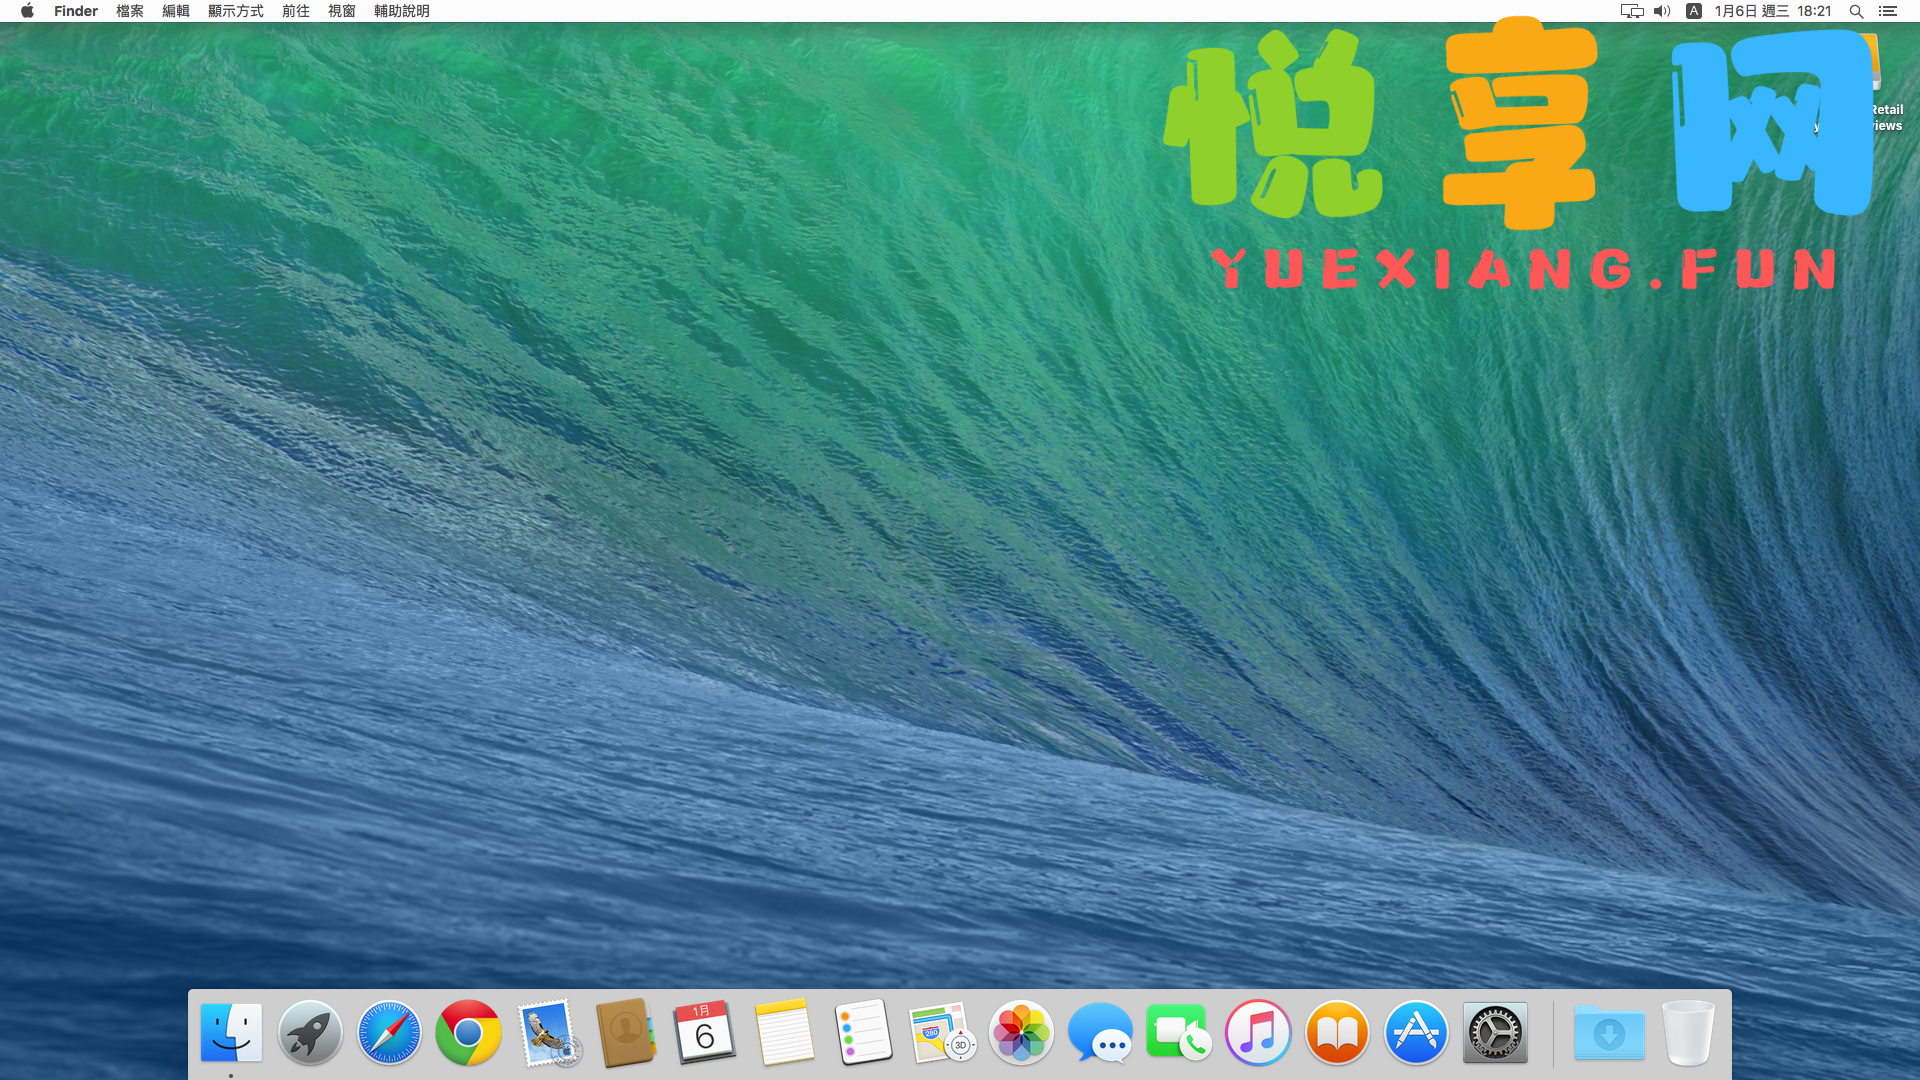 Mac OS X Mavericks 10.9.5 (13F34) 原版DMG黑苹果镜像